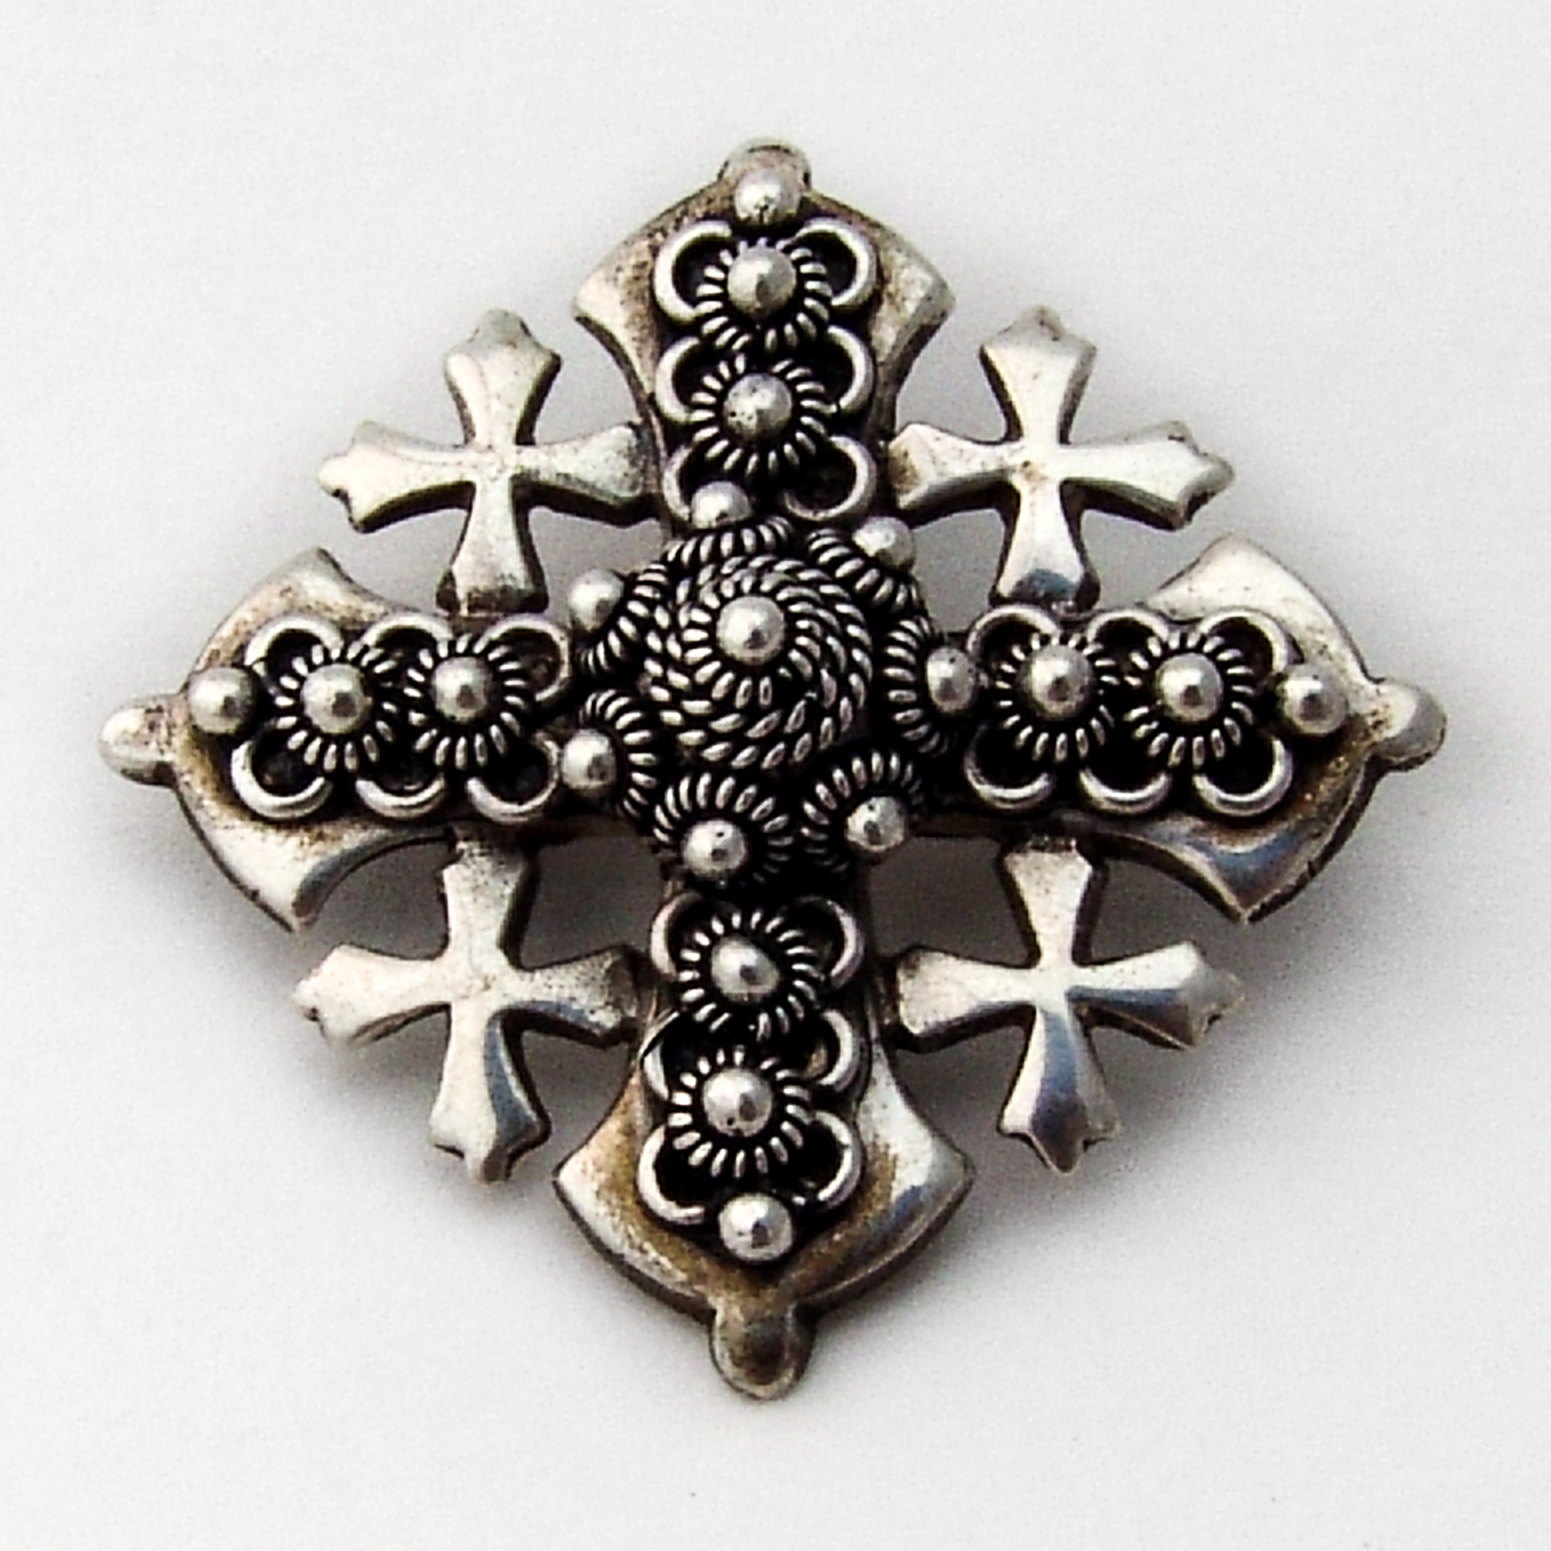 Jerusalem Cross Brooch Pendant 900 Silver | eBay